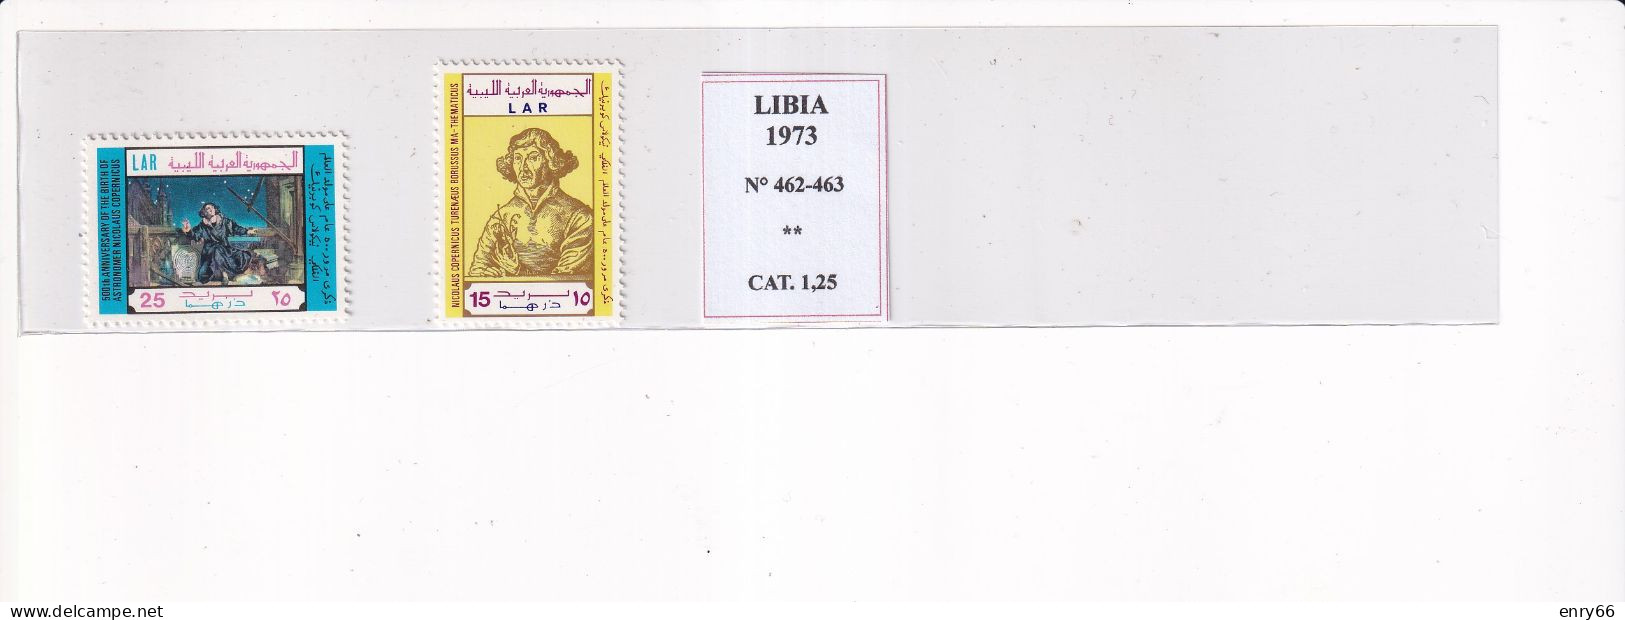 LIBIA 1973 N°462-463 MNH - Libia